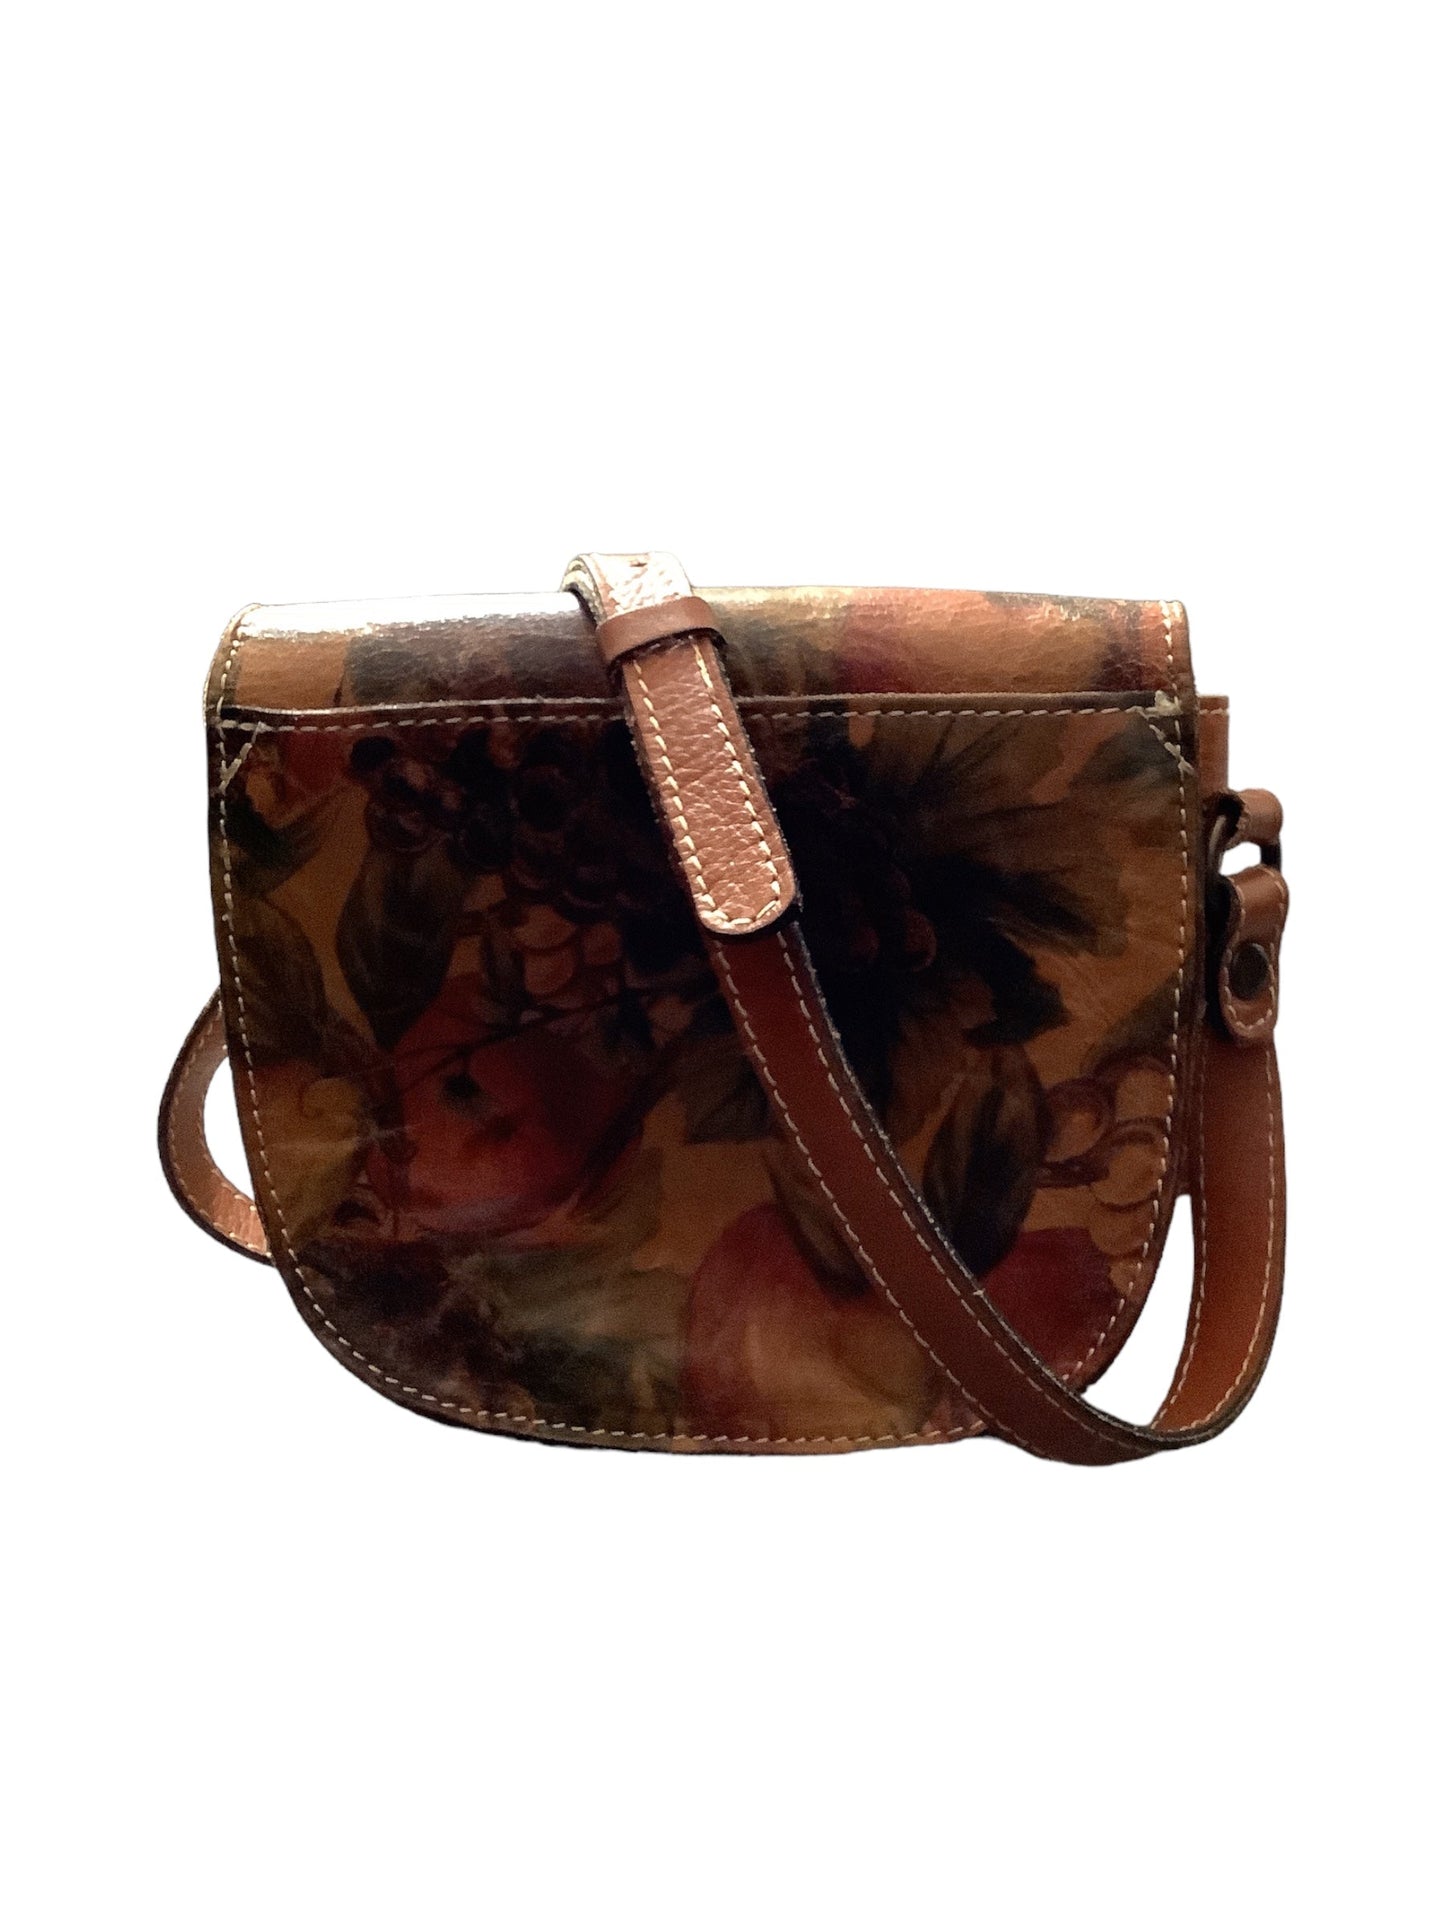 Handbag Leather Patricia Nash, Size Small